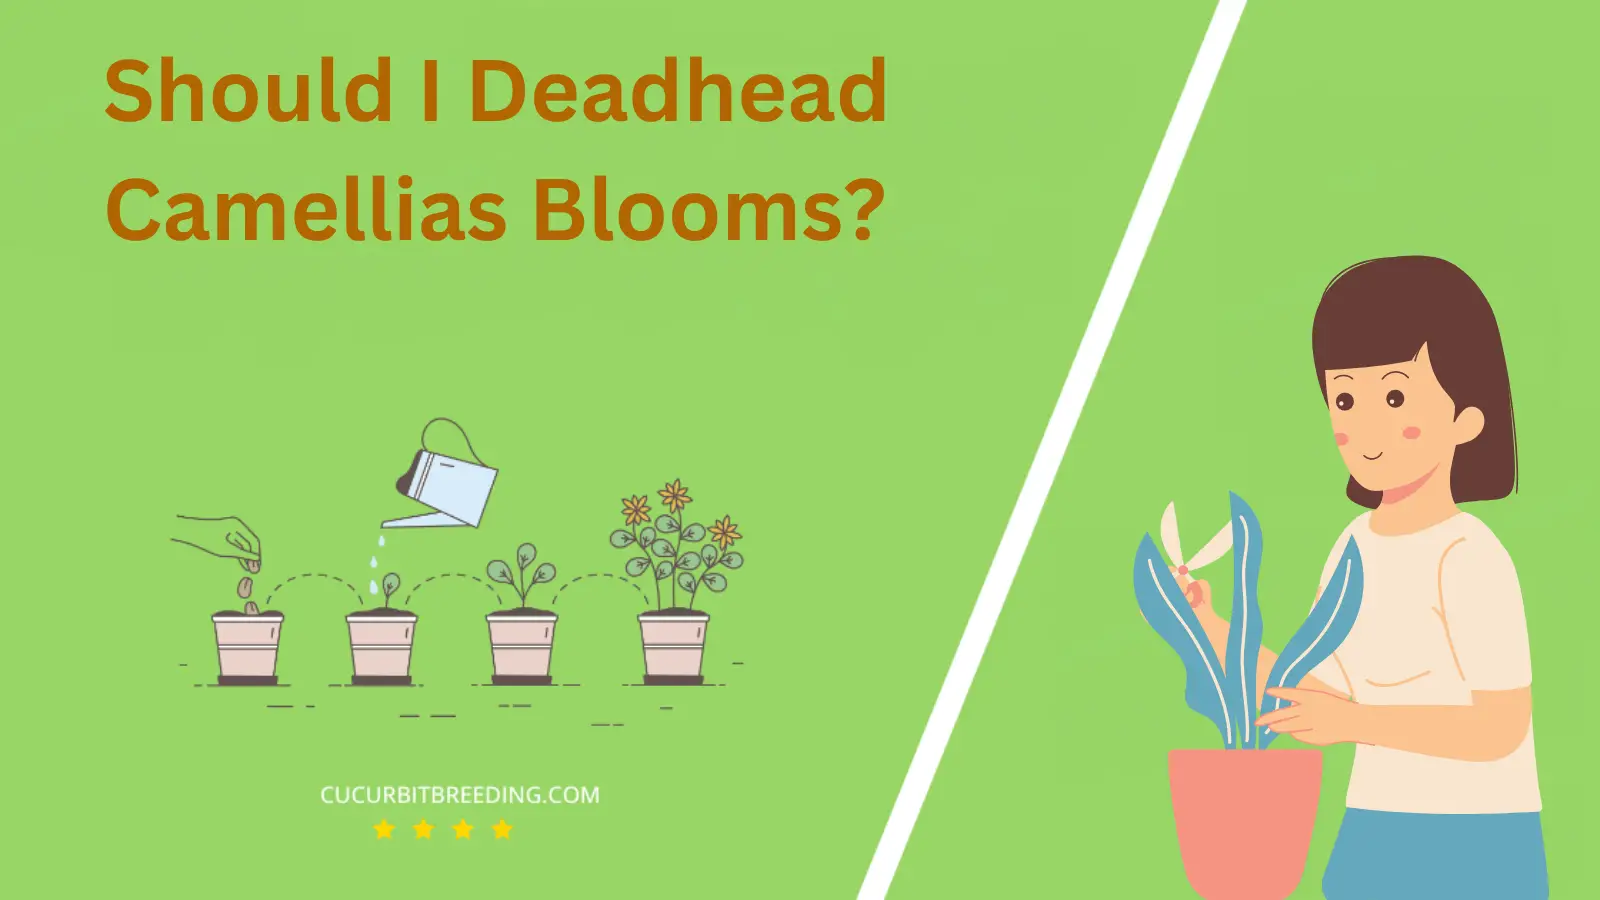 Should I Deadhead Camellias Blooms?